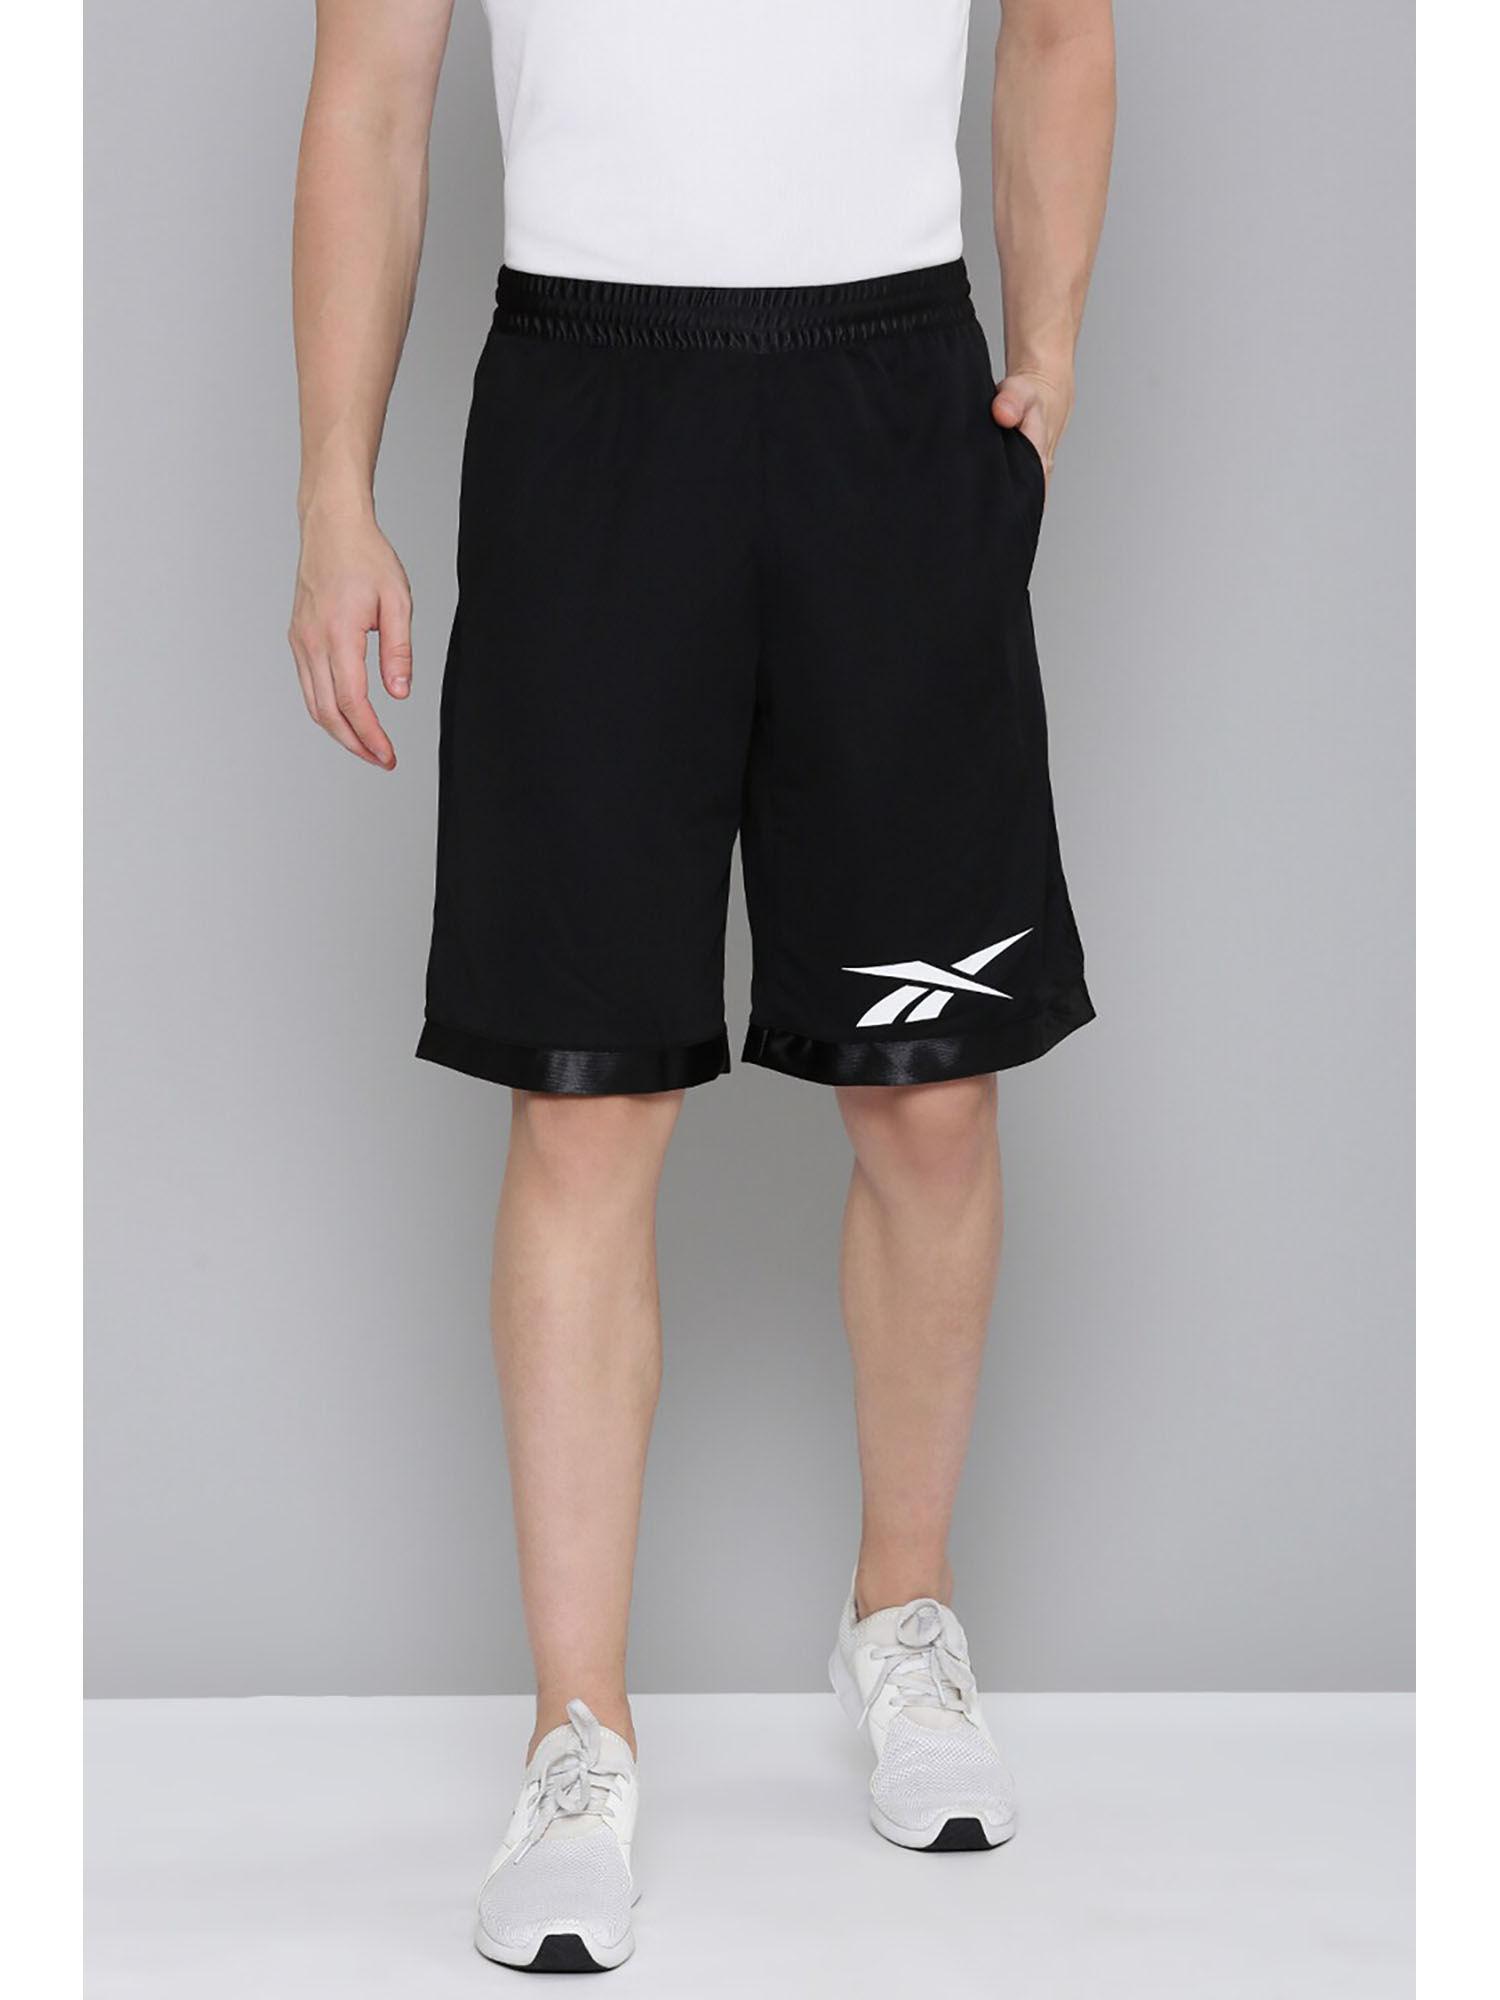 mens black basketball mesh shorts